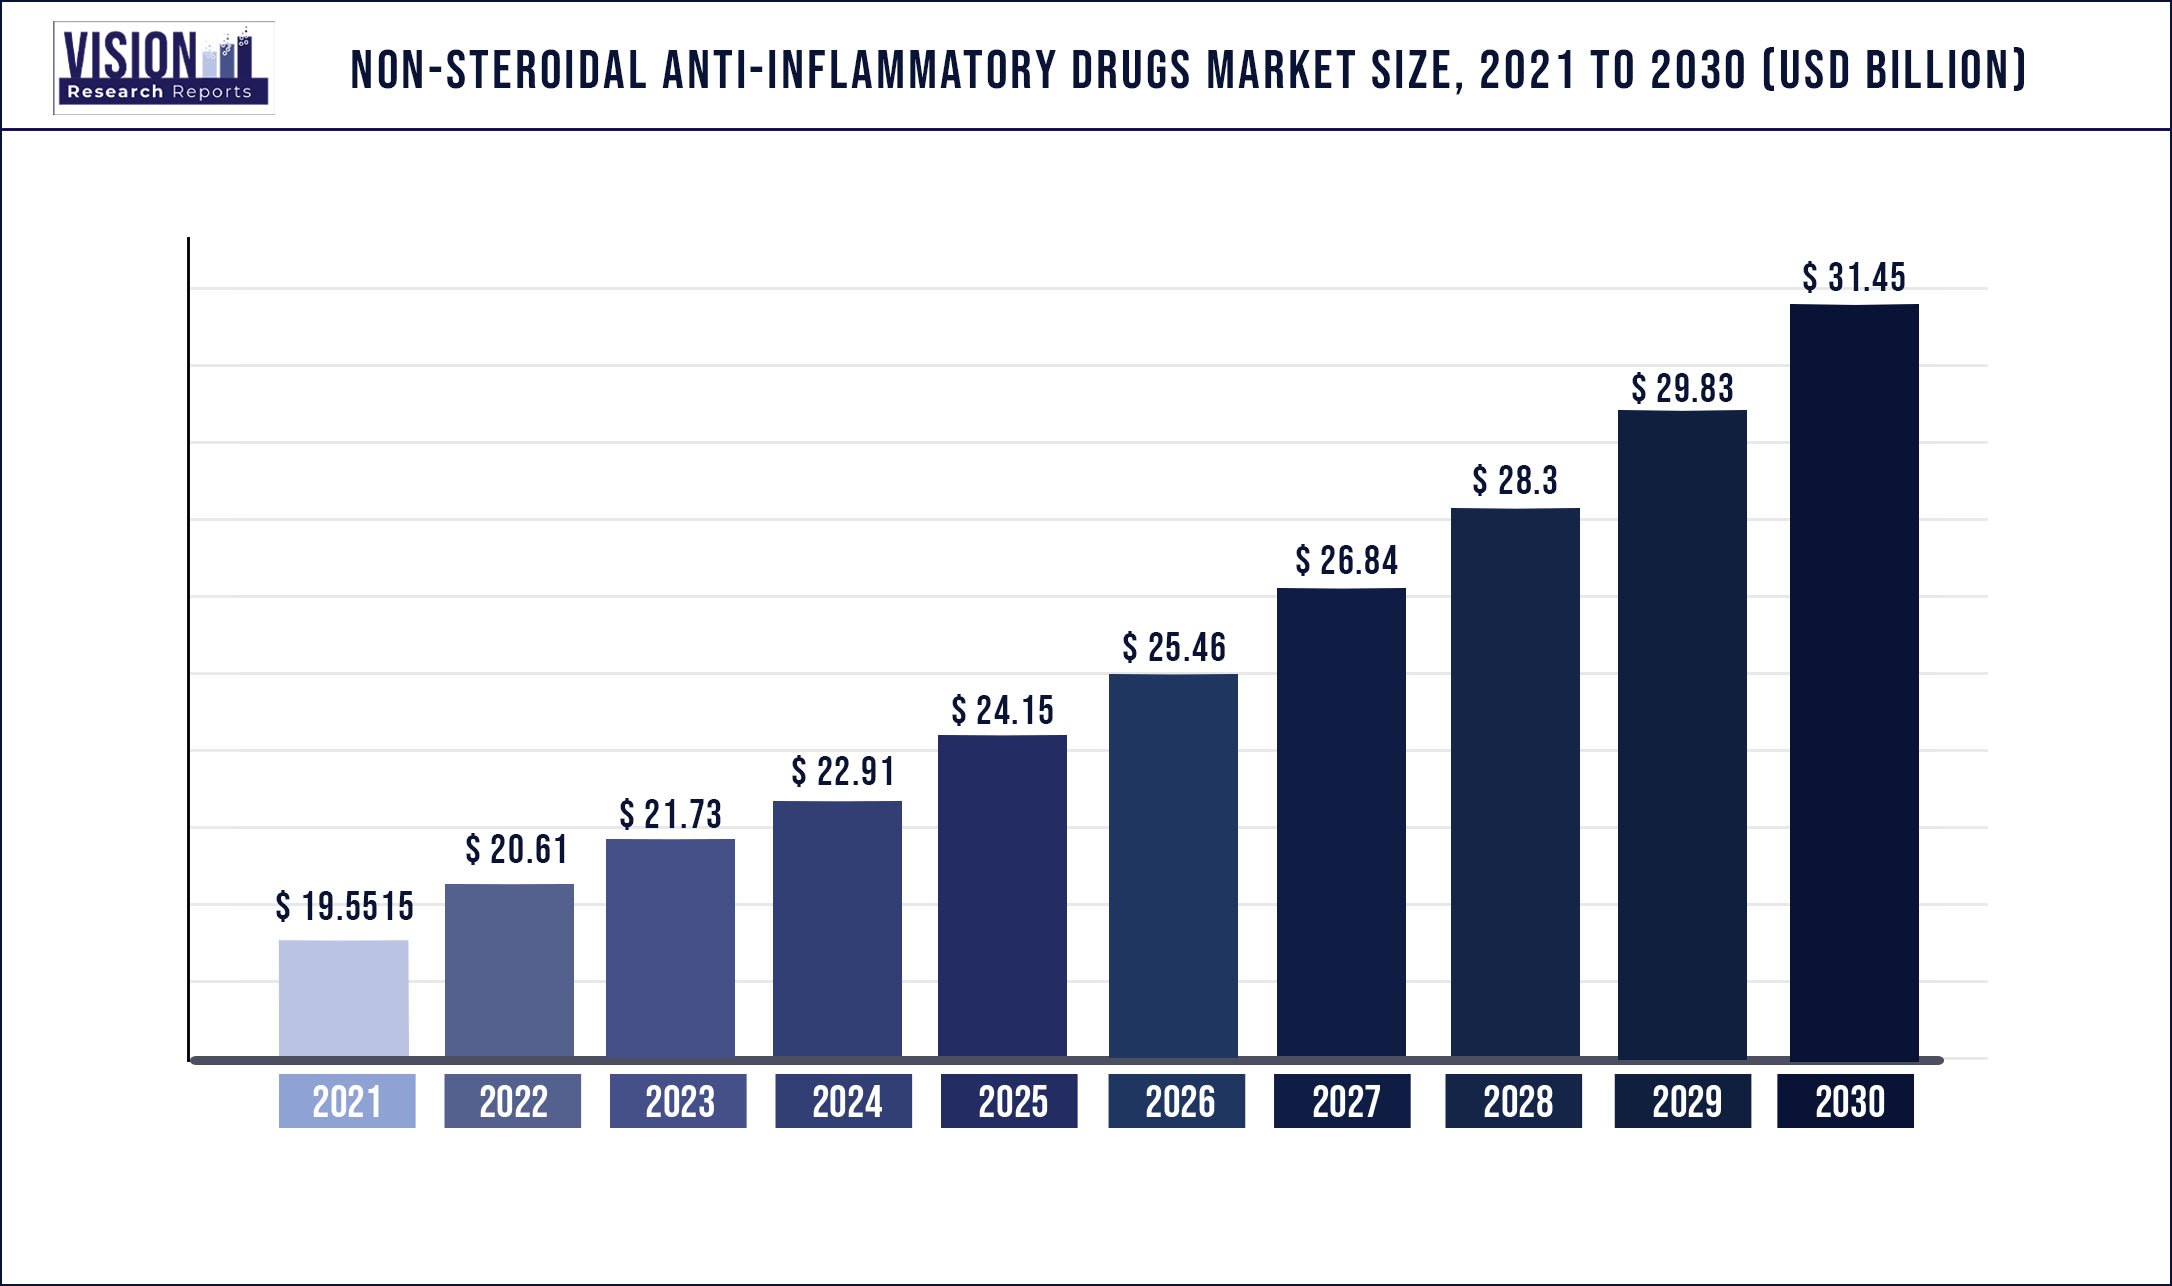 Non-steroidal Anti-inflammatory Drugs Market Size 2021 to 2030